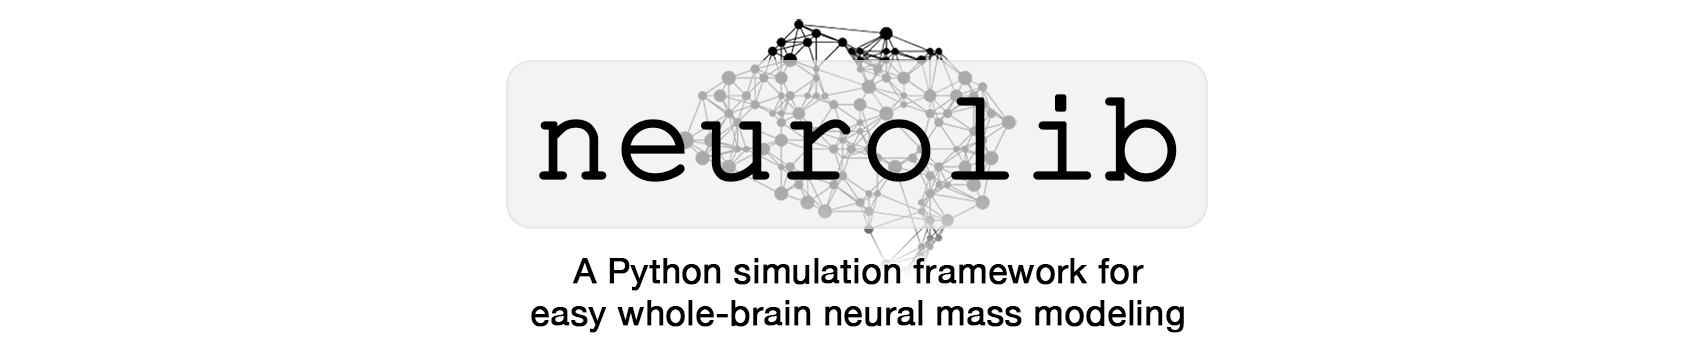 Header image of neurolib - A Python simulation framework for
easy whole-brain neural mass modeling.